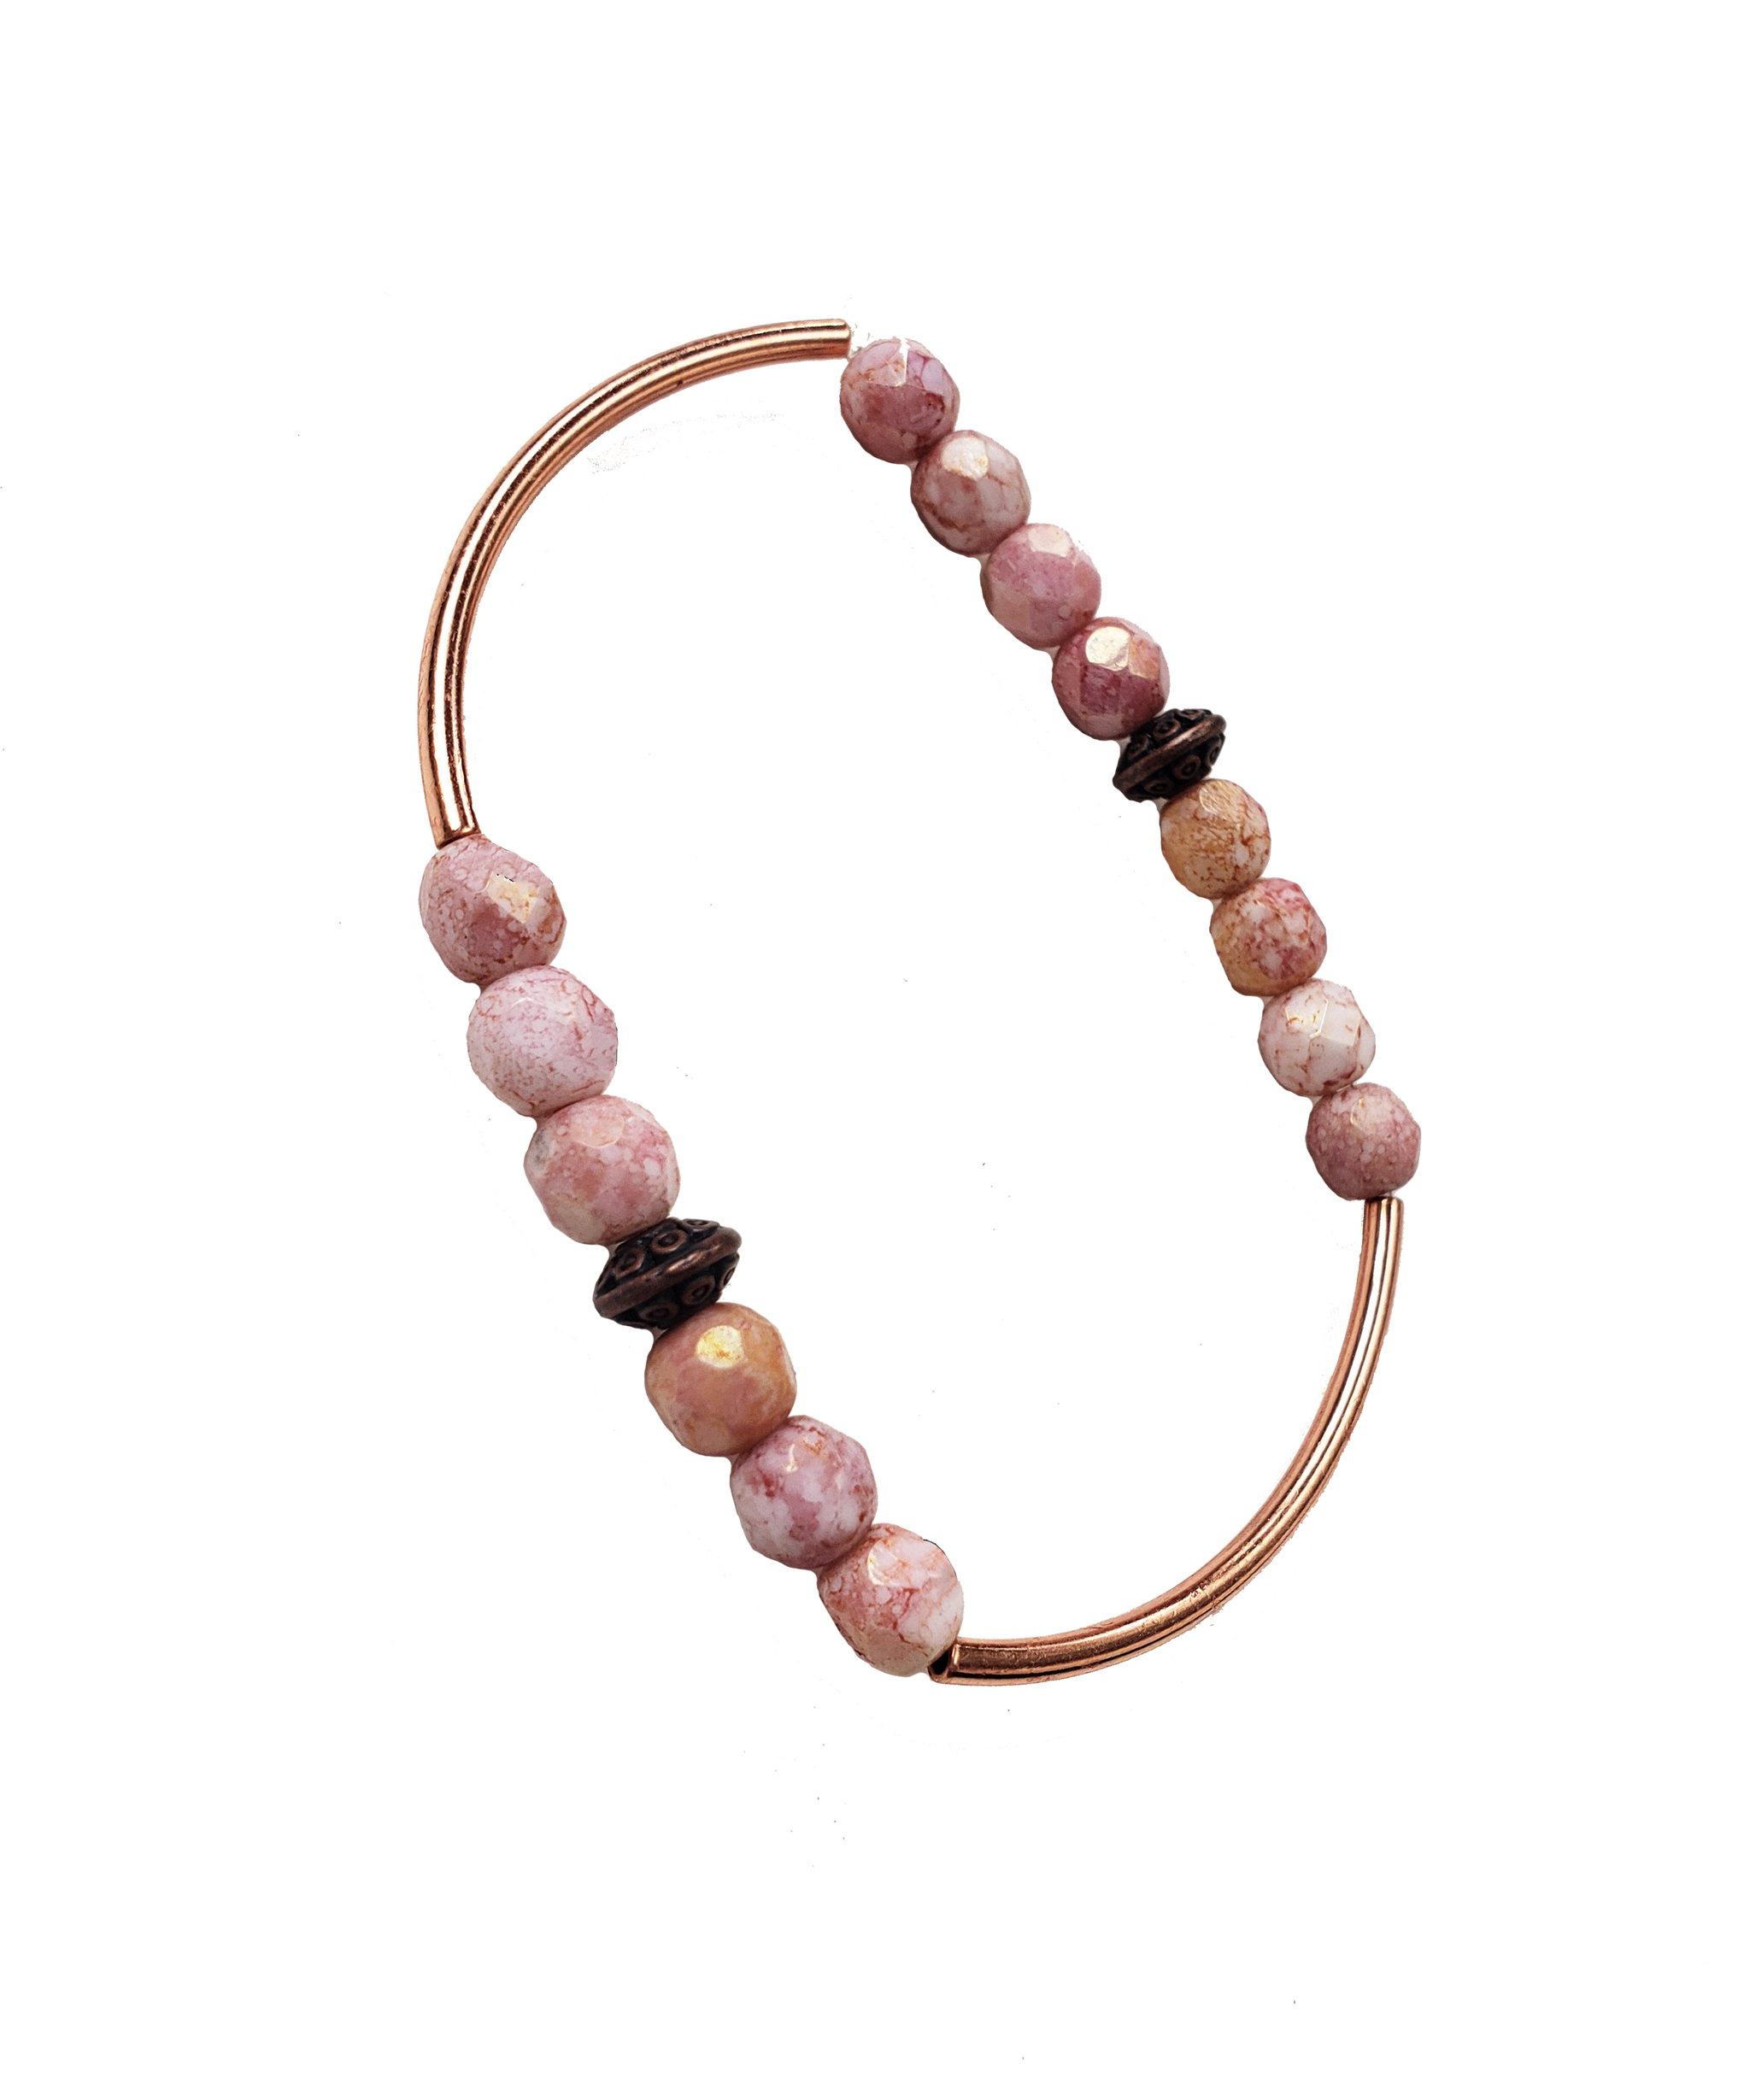 Pamplemousse Collection - Handmade Beaded Bracelets (choose 1)